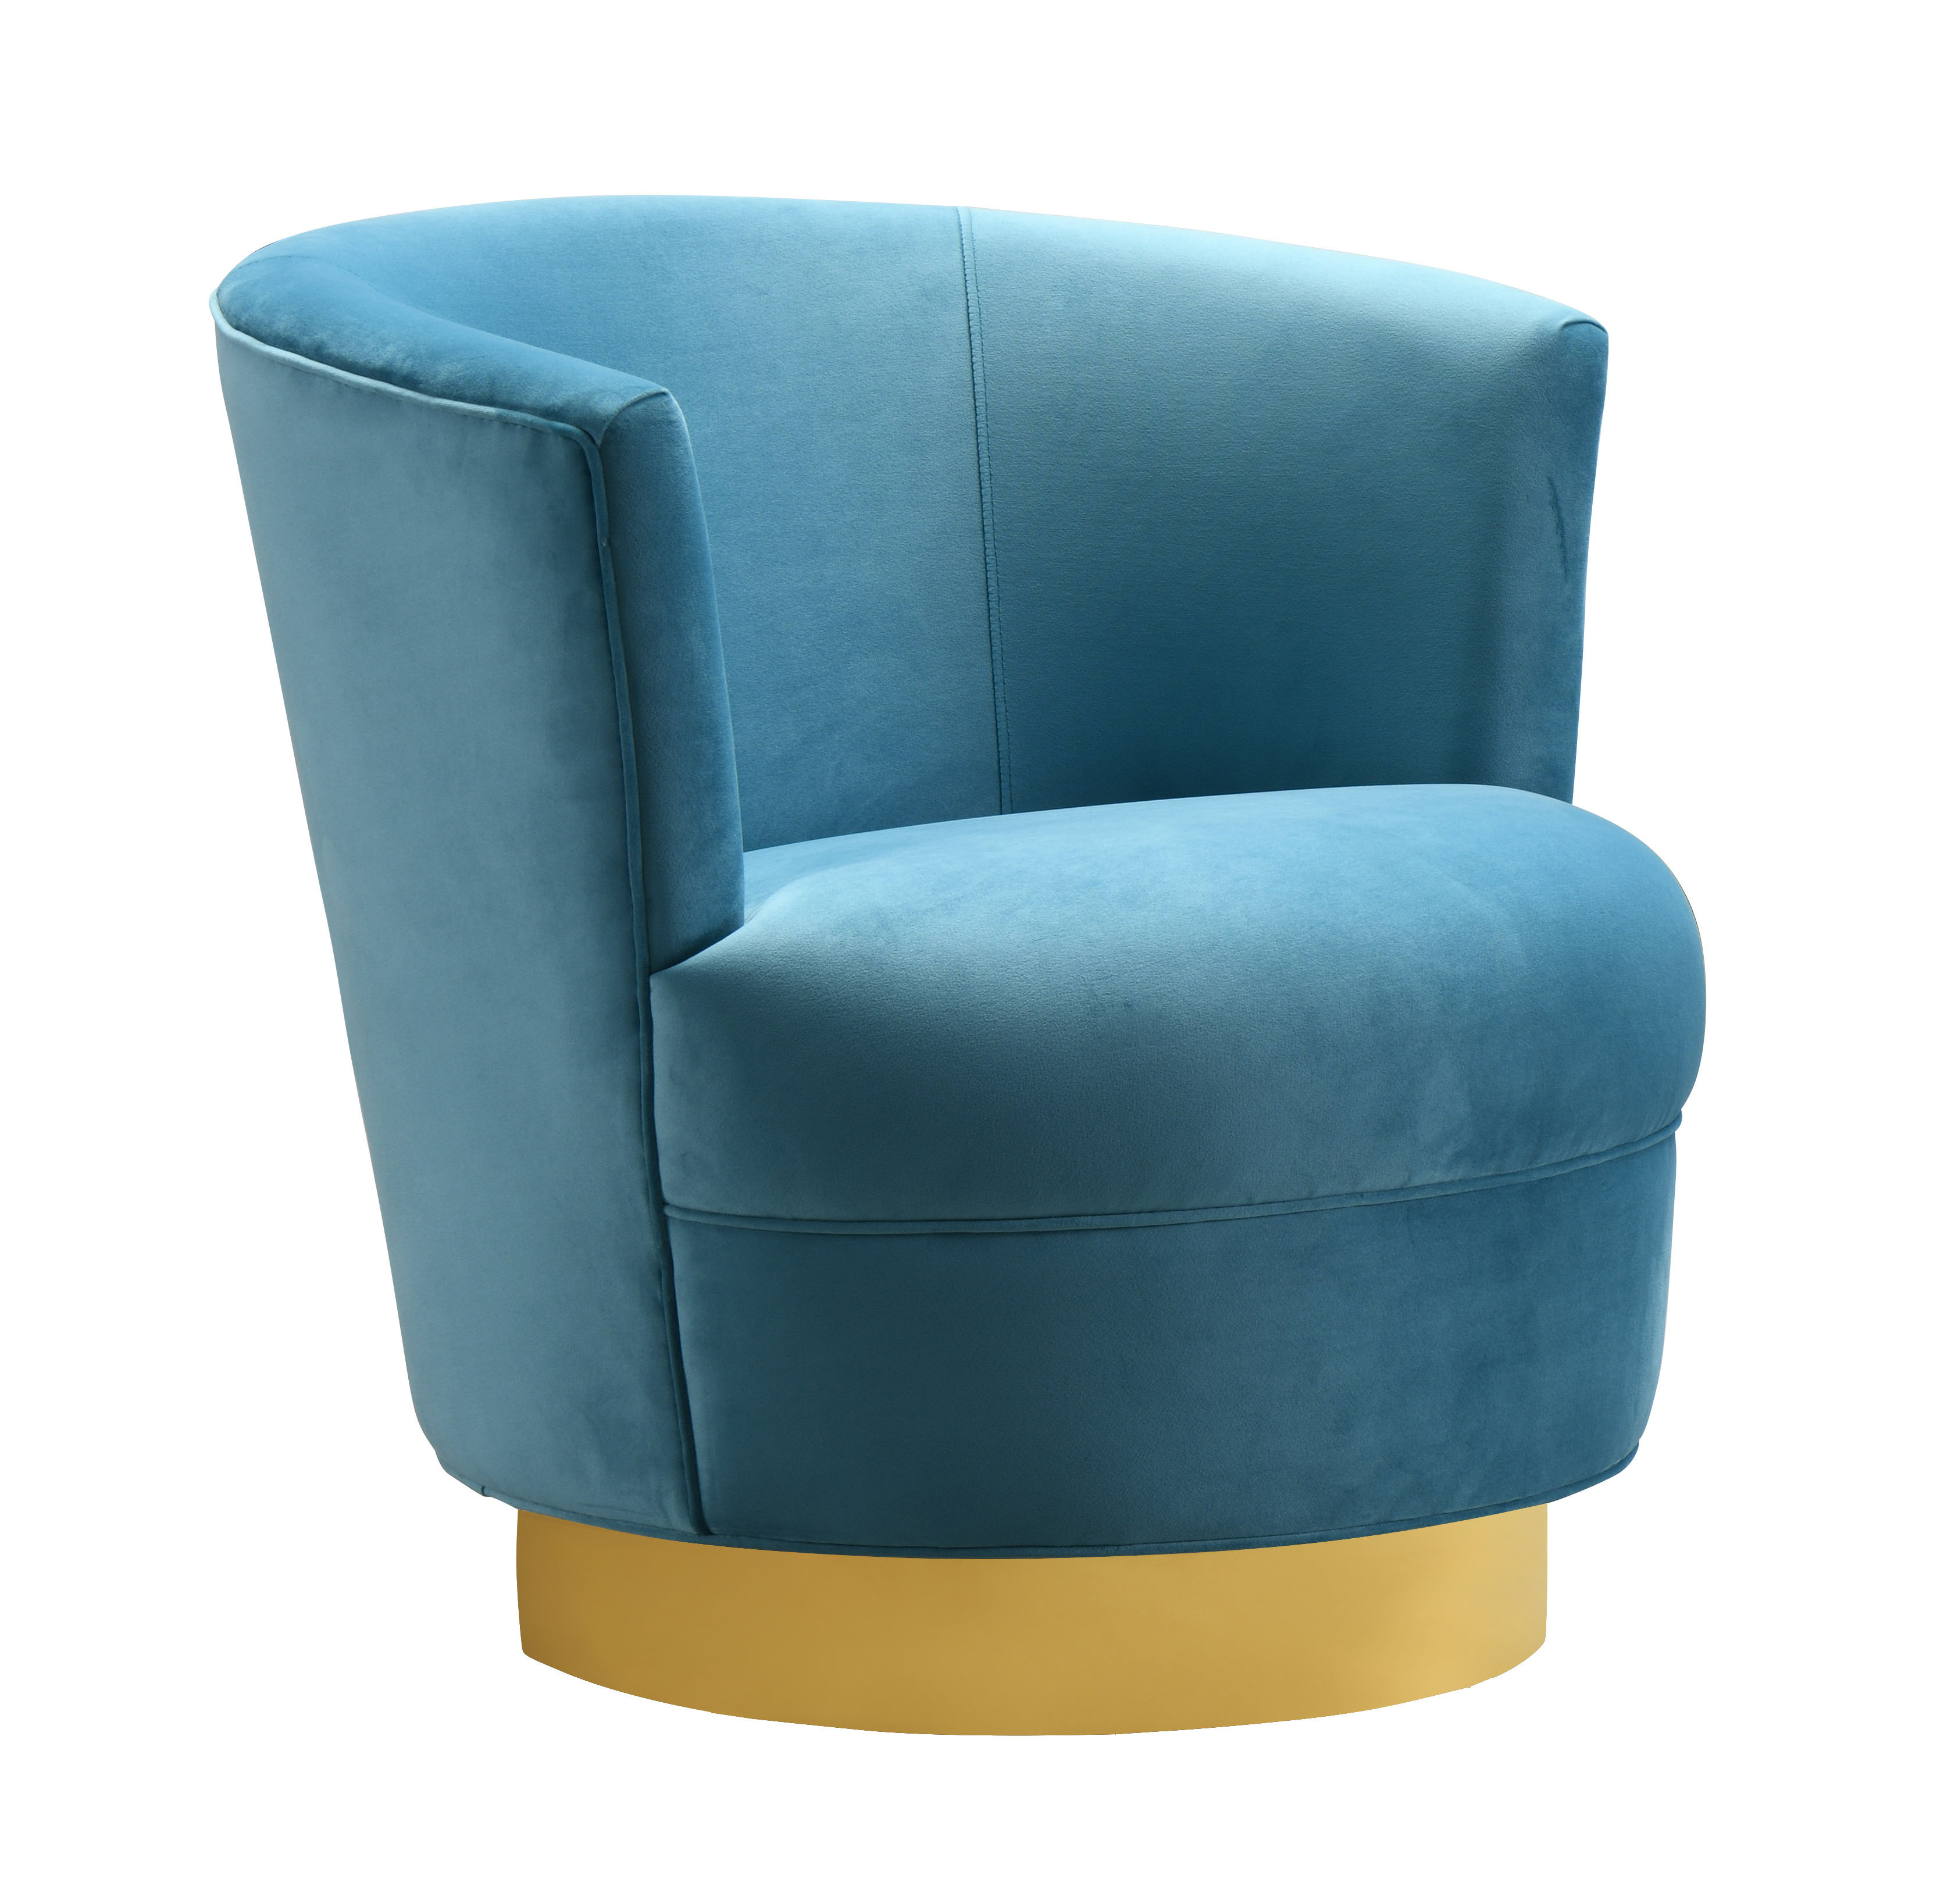 Noah Gold Base Lake Blue Swivel Chair by TOV Furniture - image 2 of 6